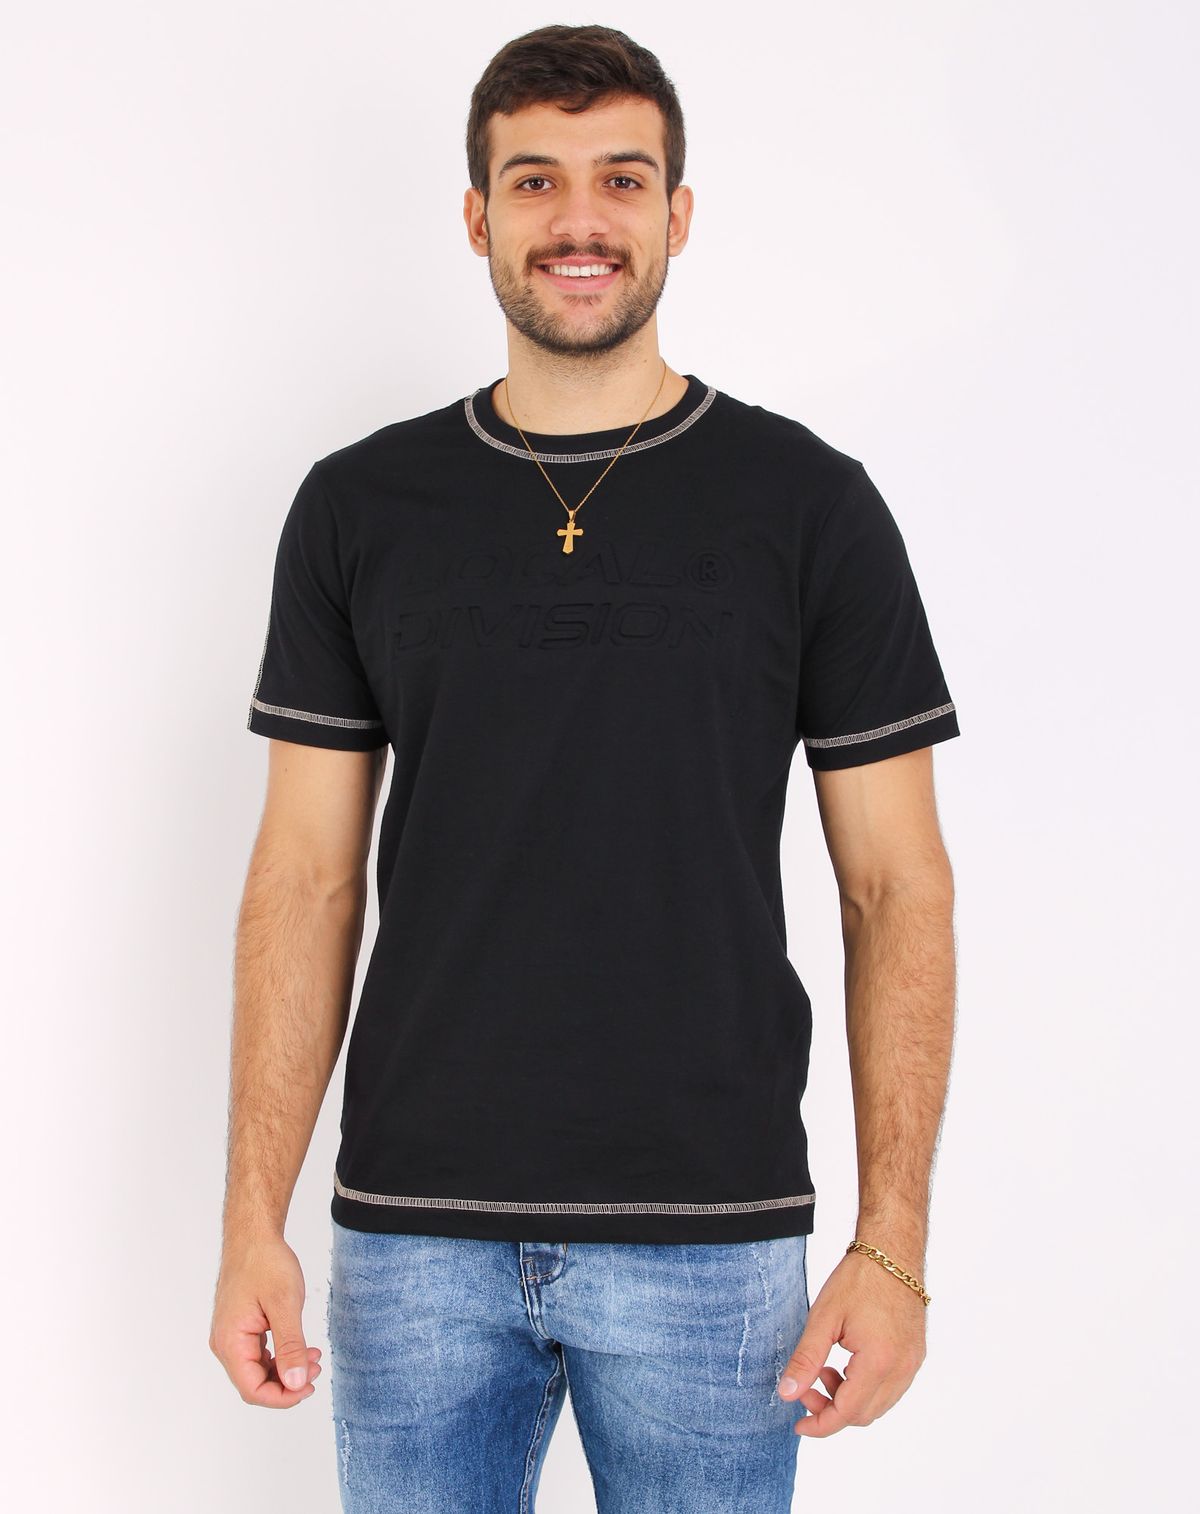 704801001-camiseta-manga-curta-masculina-costura-contrastante-preto-p-2a7